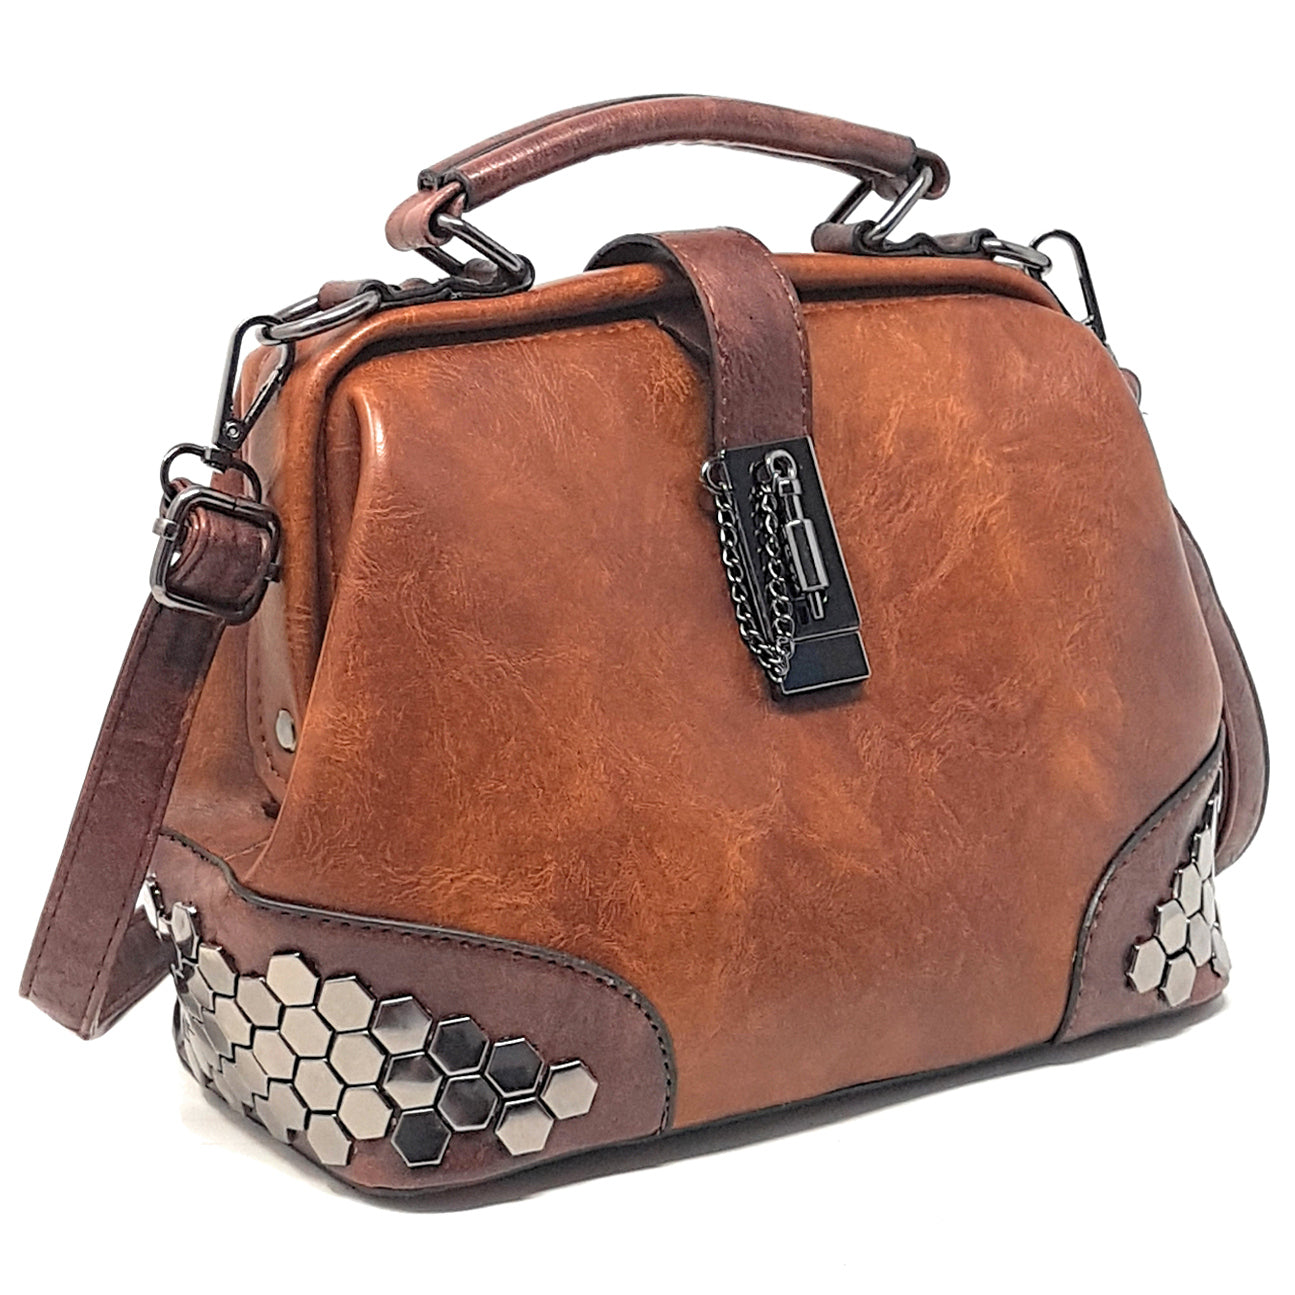 Vegan Leather Women's Handbag and Purse